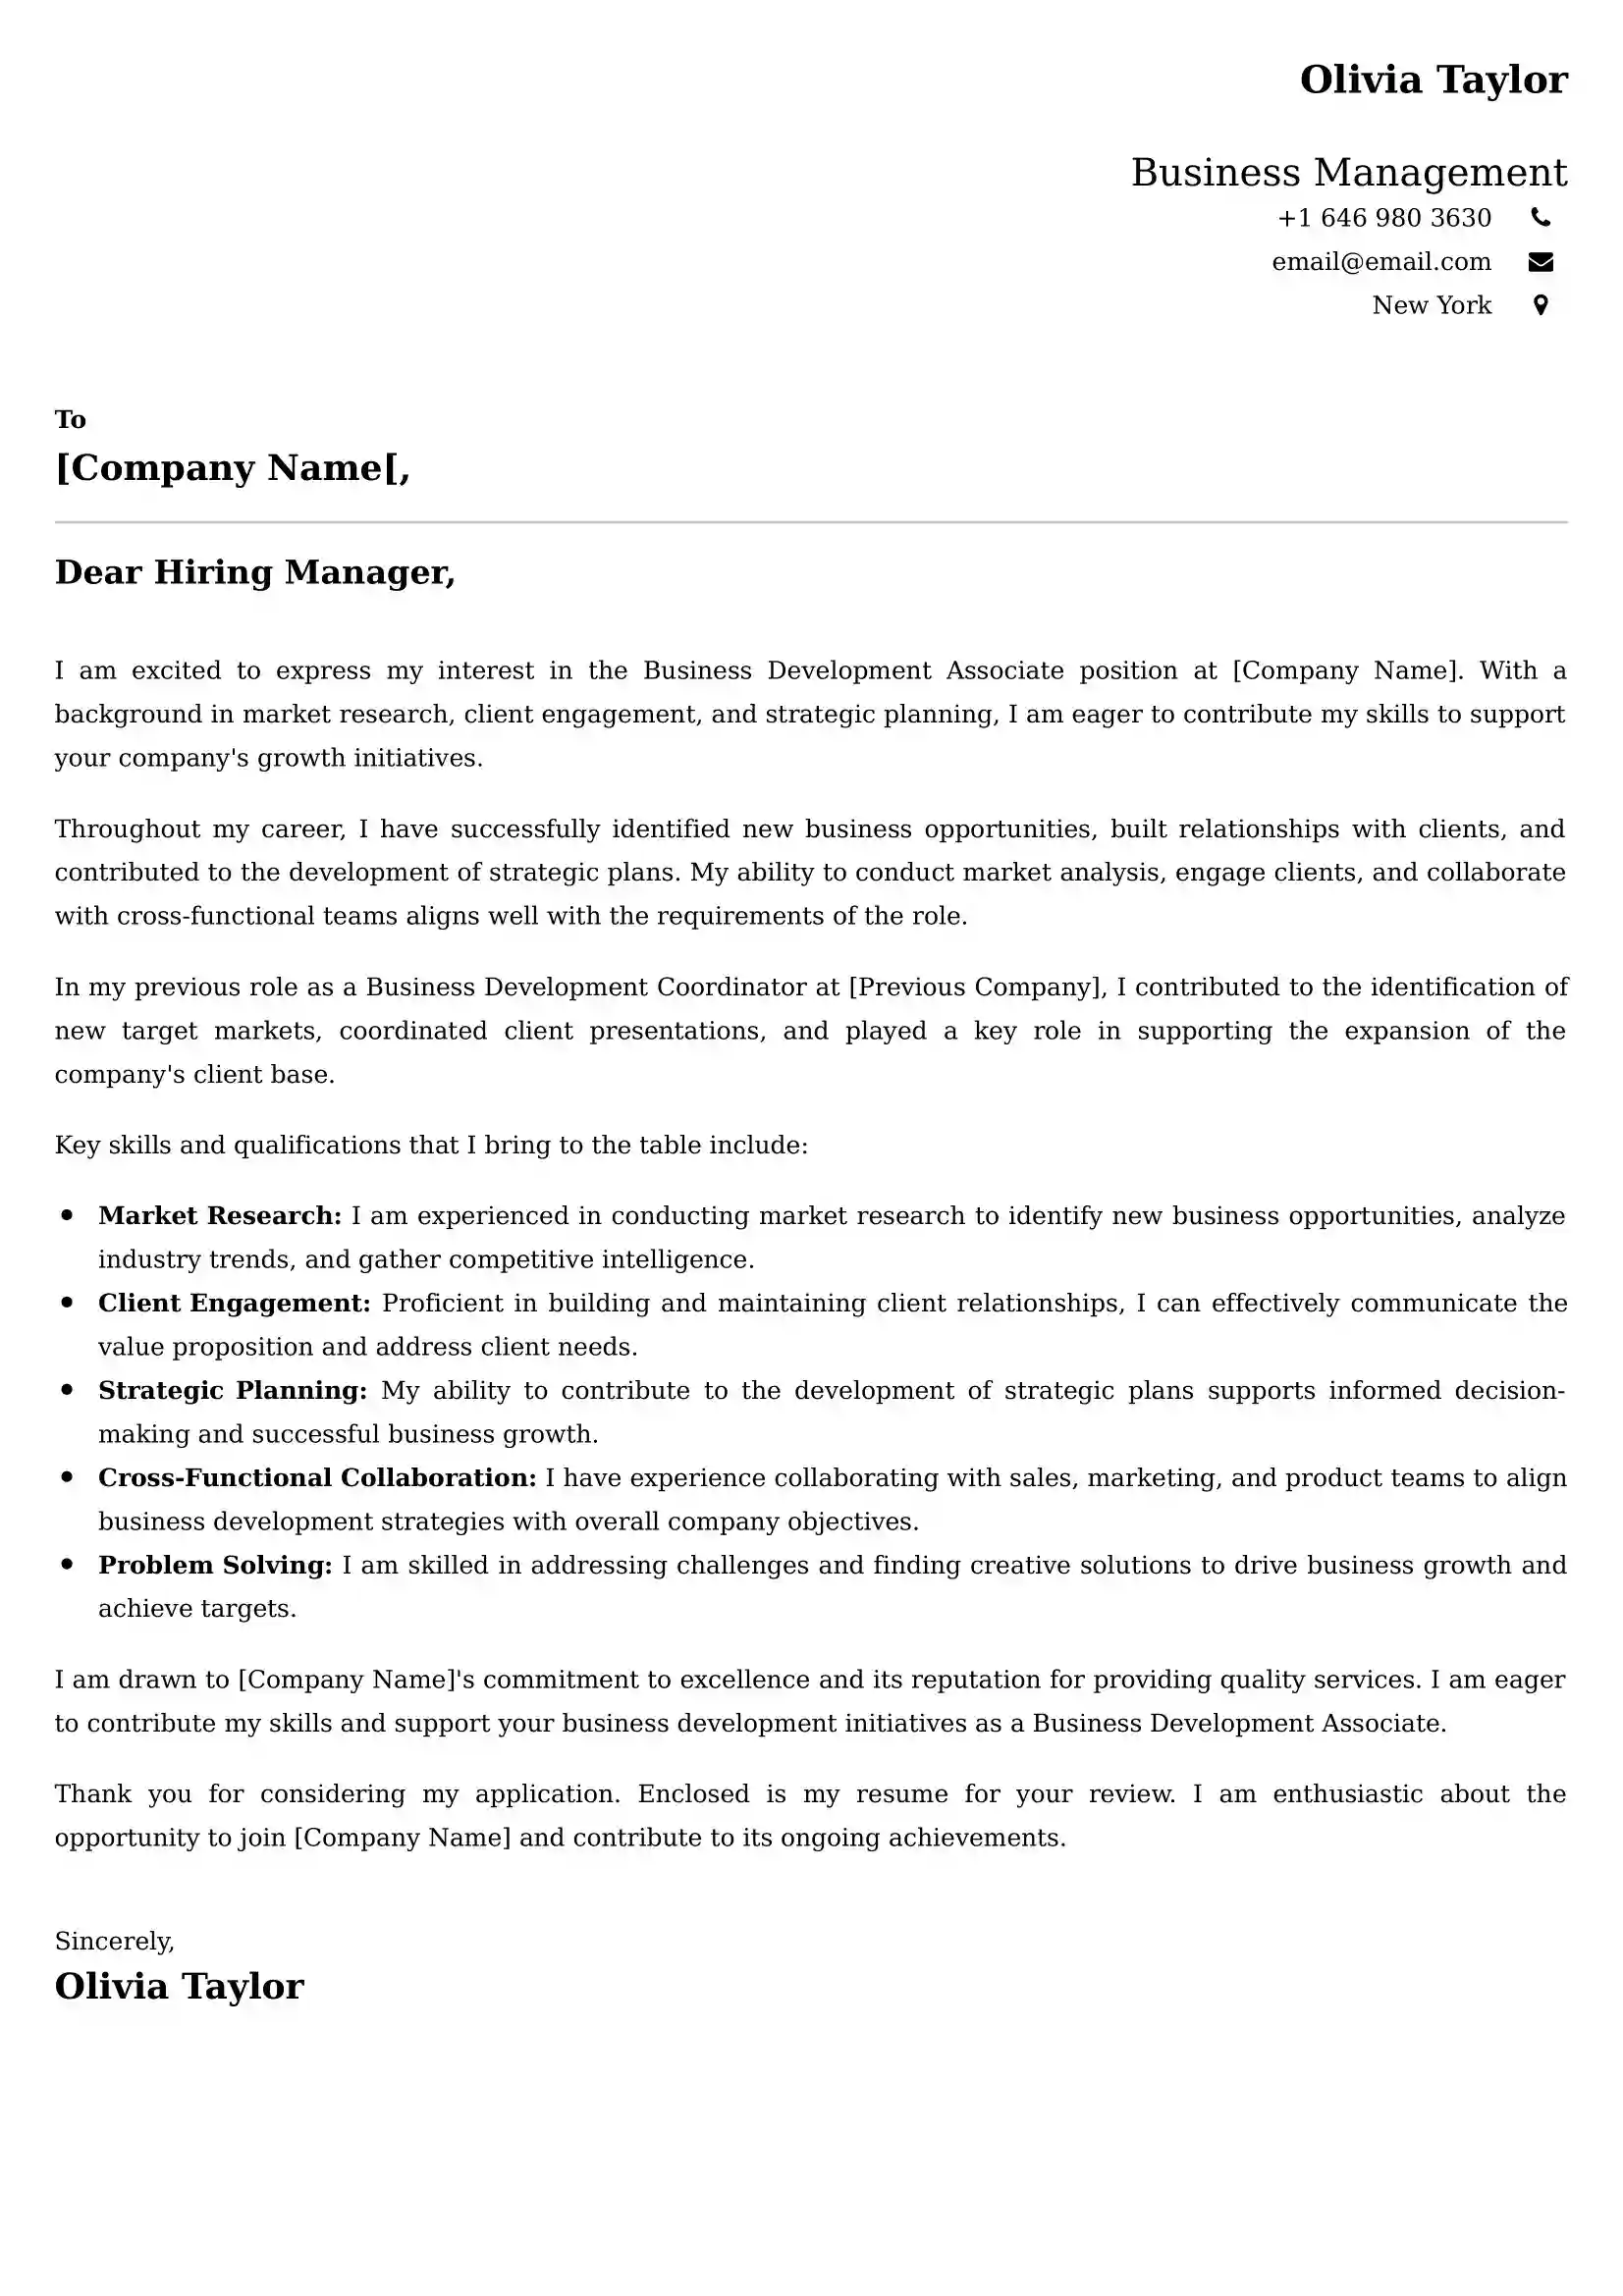 Business Management Cover Letter Sample